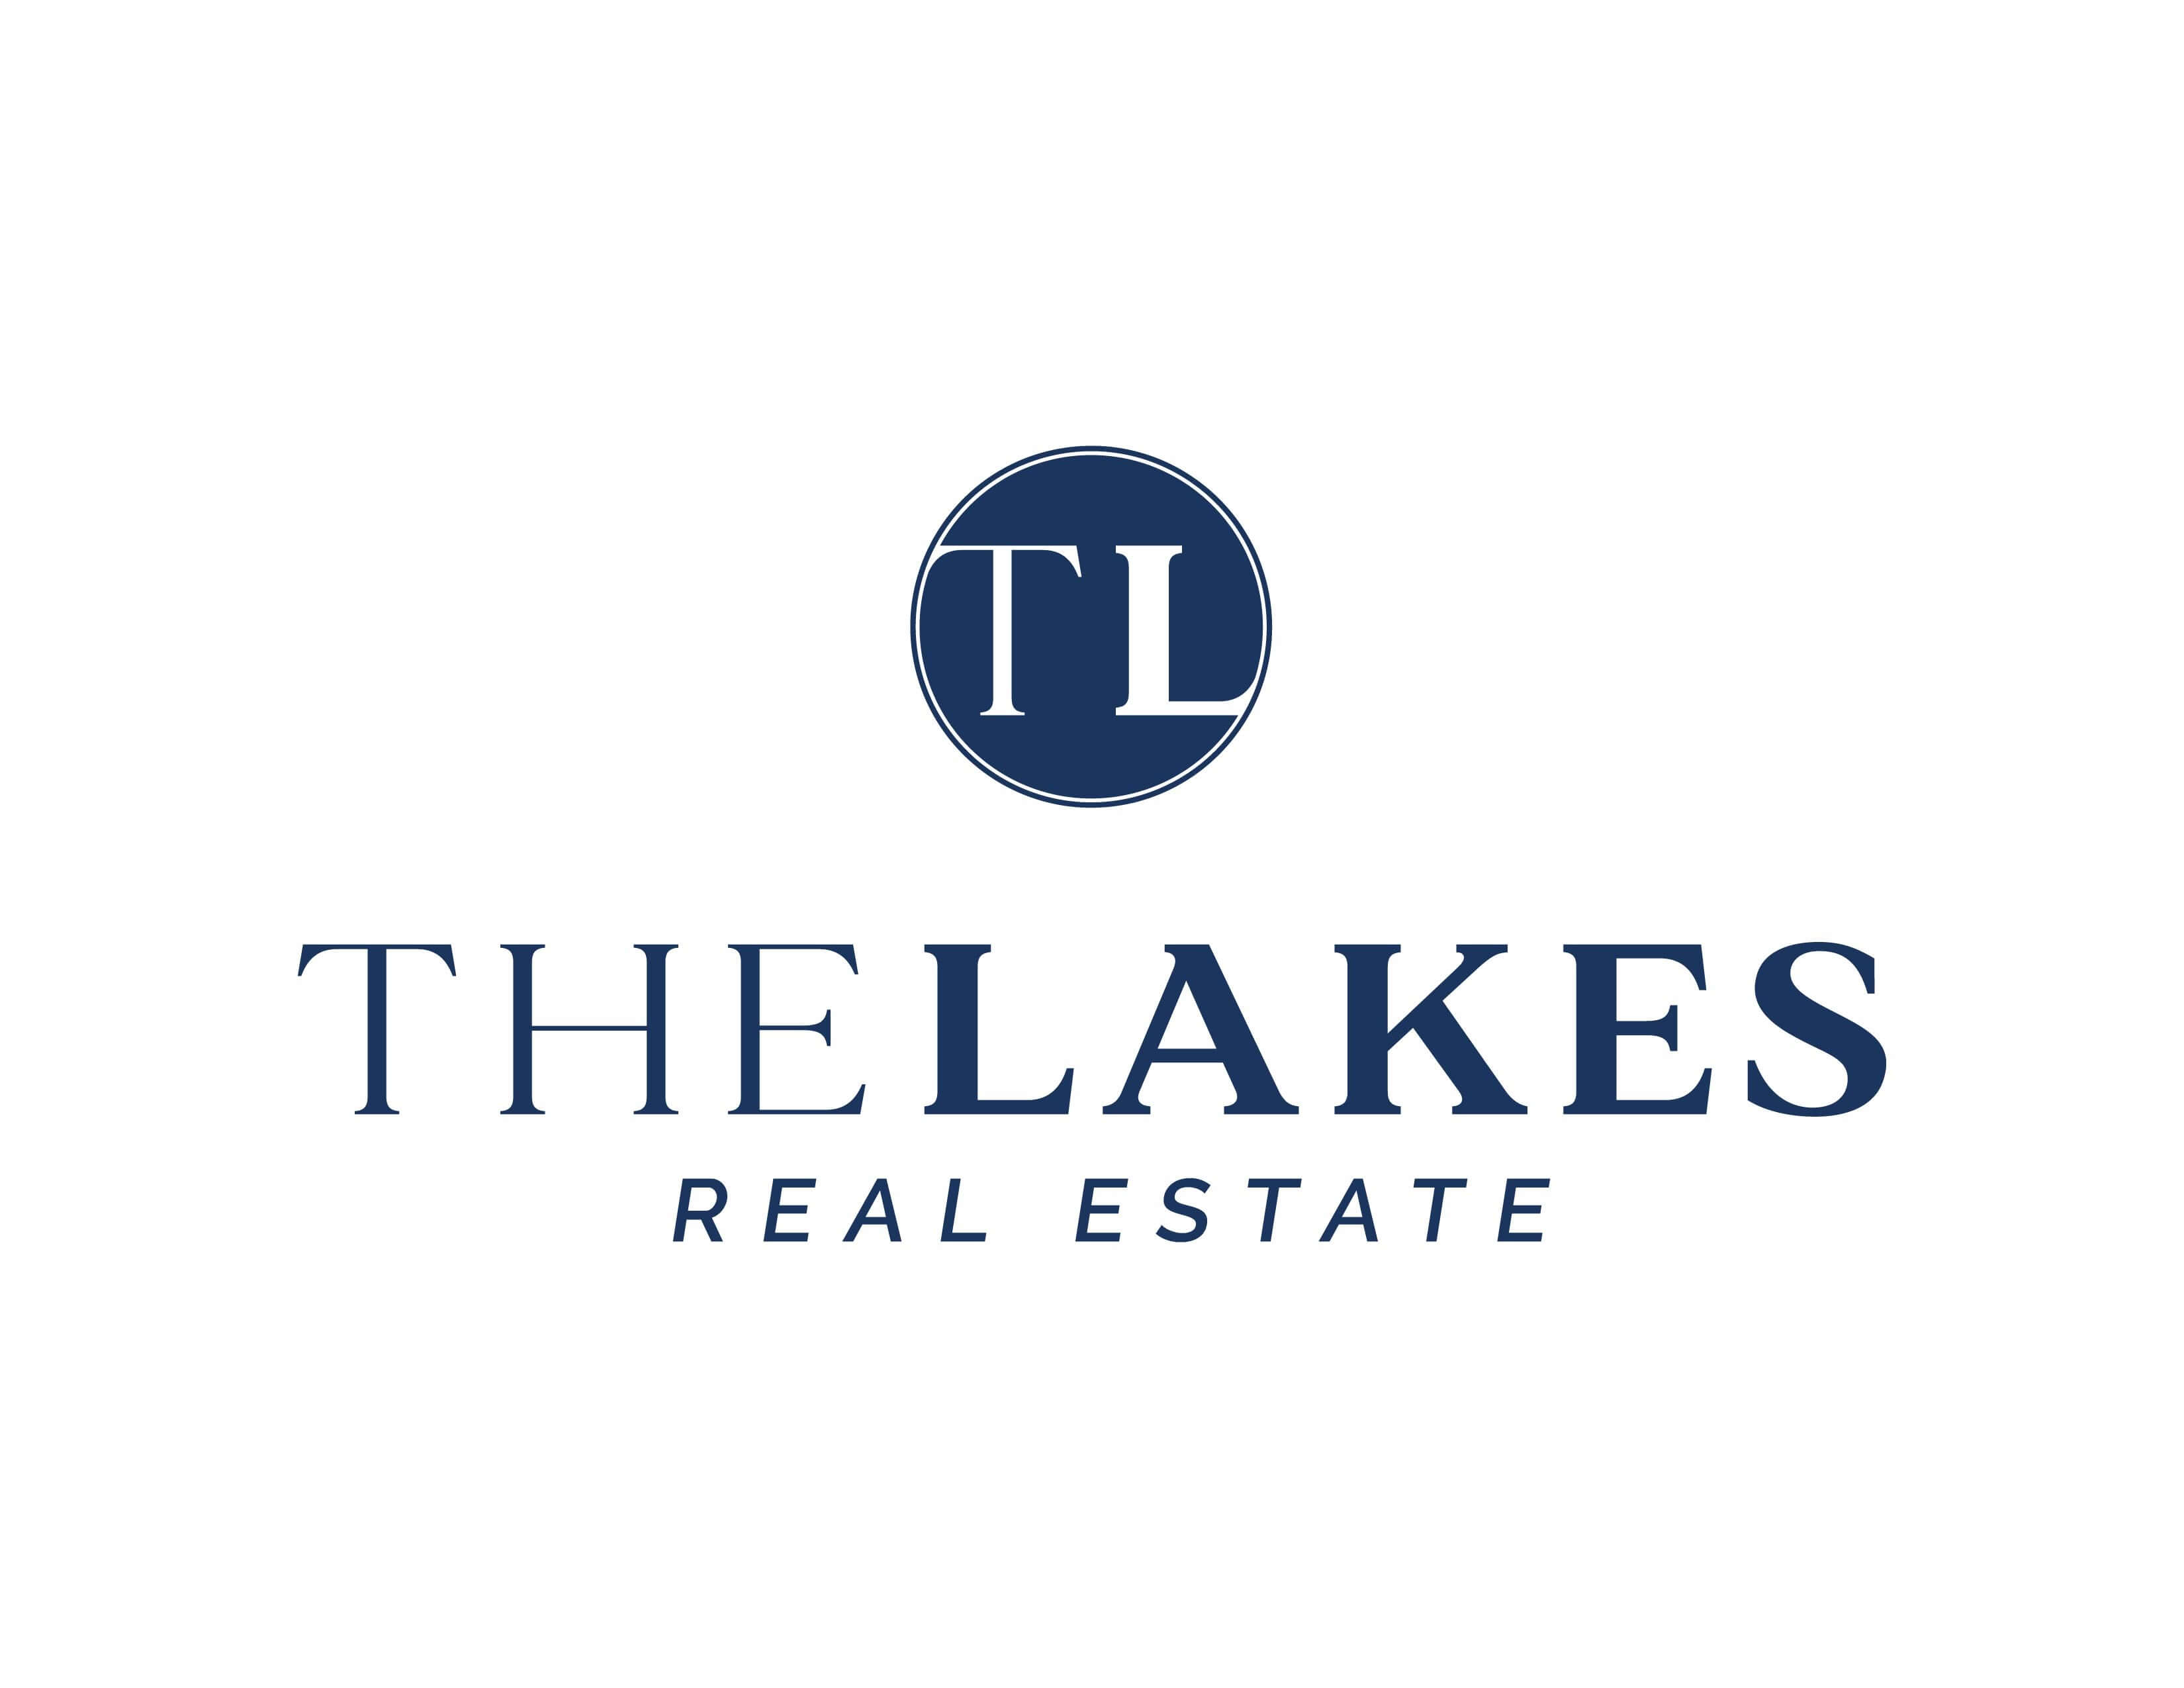 At The Lakes Real Estate